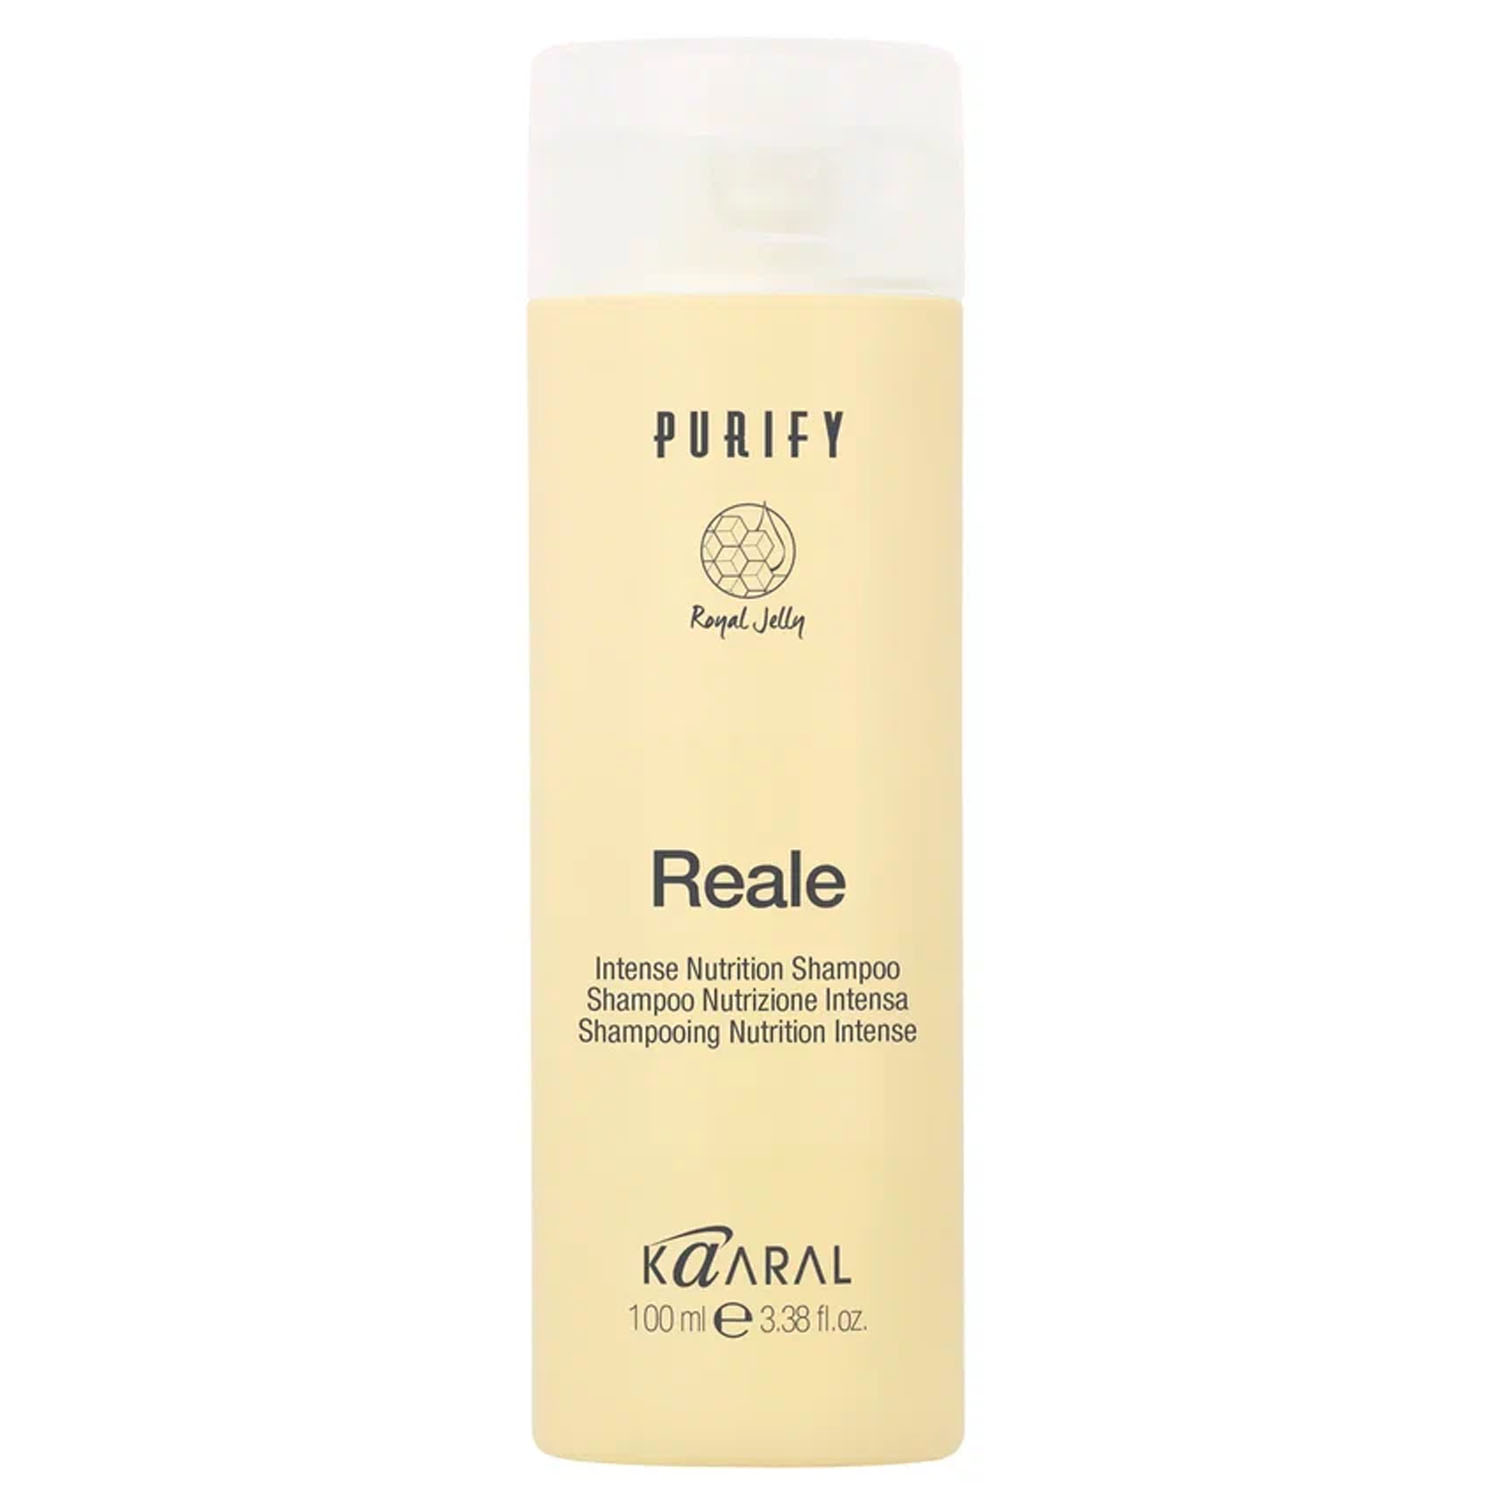 Kaaral Восстанавливающий шампунь для поврежденных волос Reale Intense Nutrition Shampoo, 100 мл (Kaaral, Purify) шампунь для поврежденных волос восстанавливающий kaaral purify reale shampoo 1000 мл